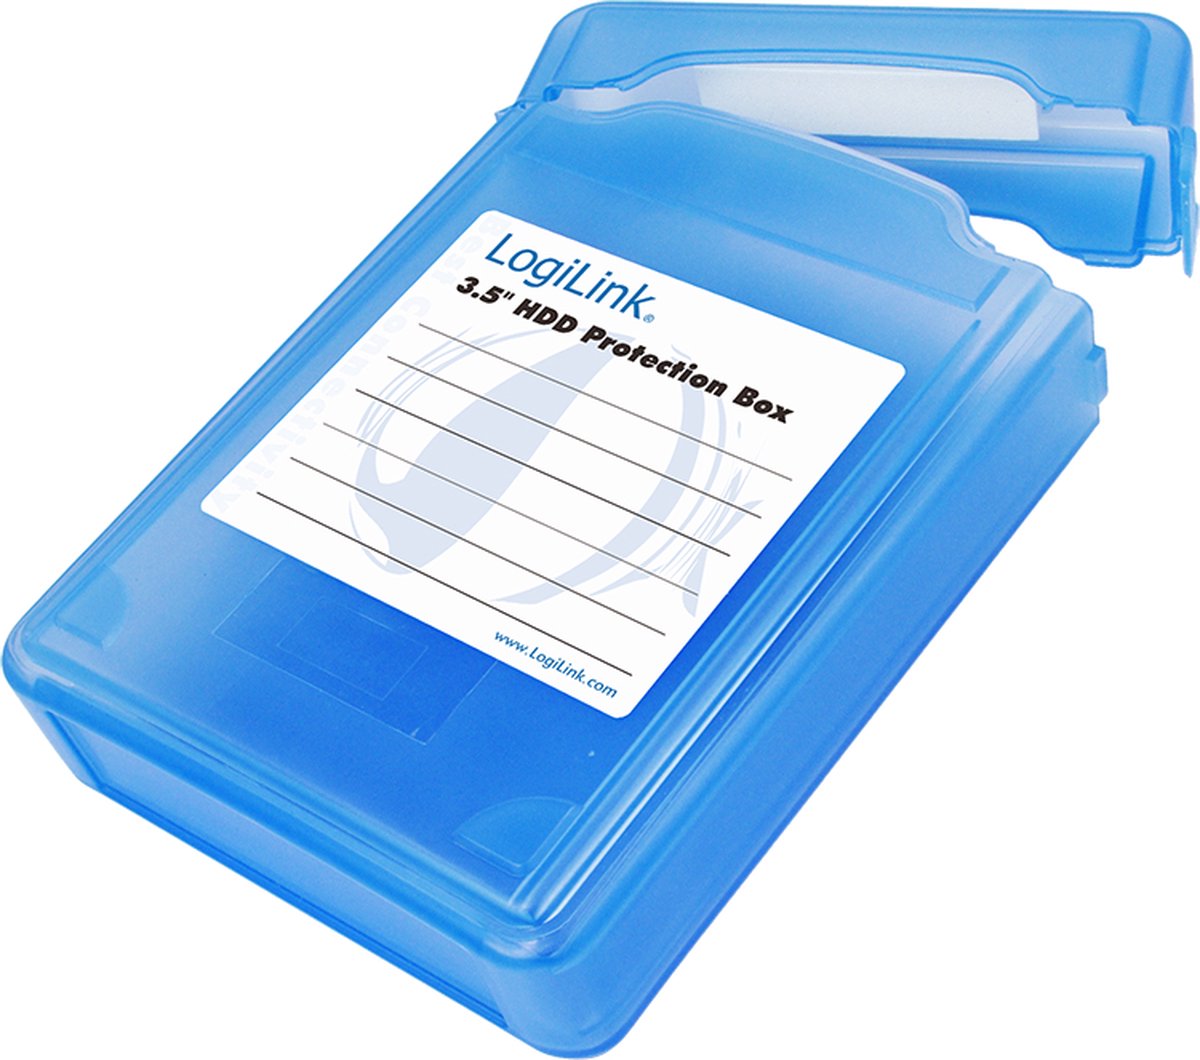 Afsluitbare bescherm box voor 3,5'' HDD / blauw